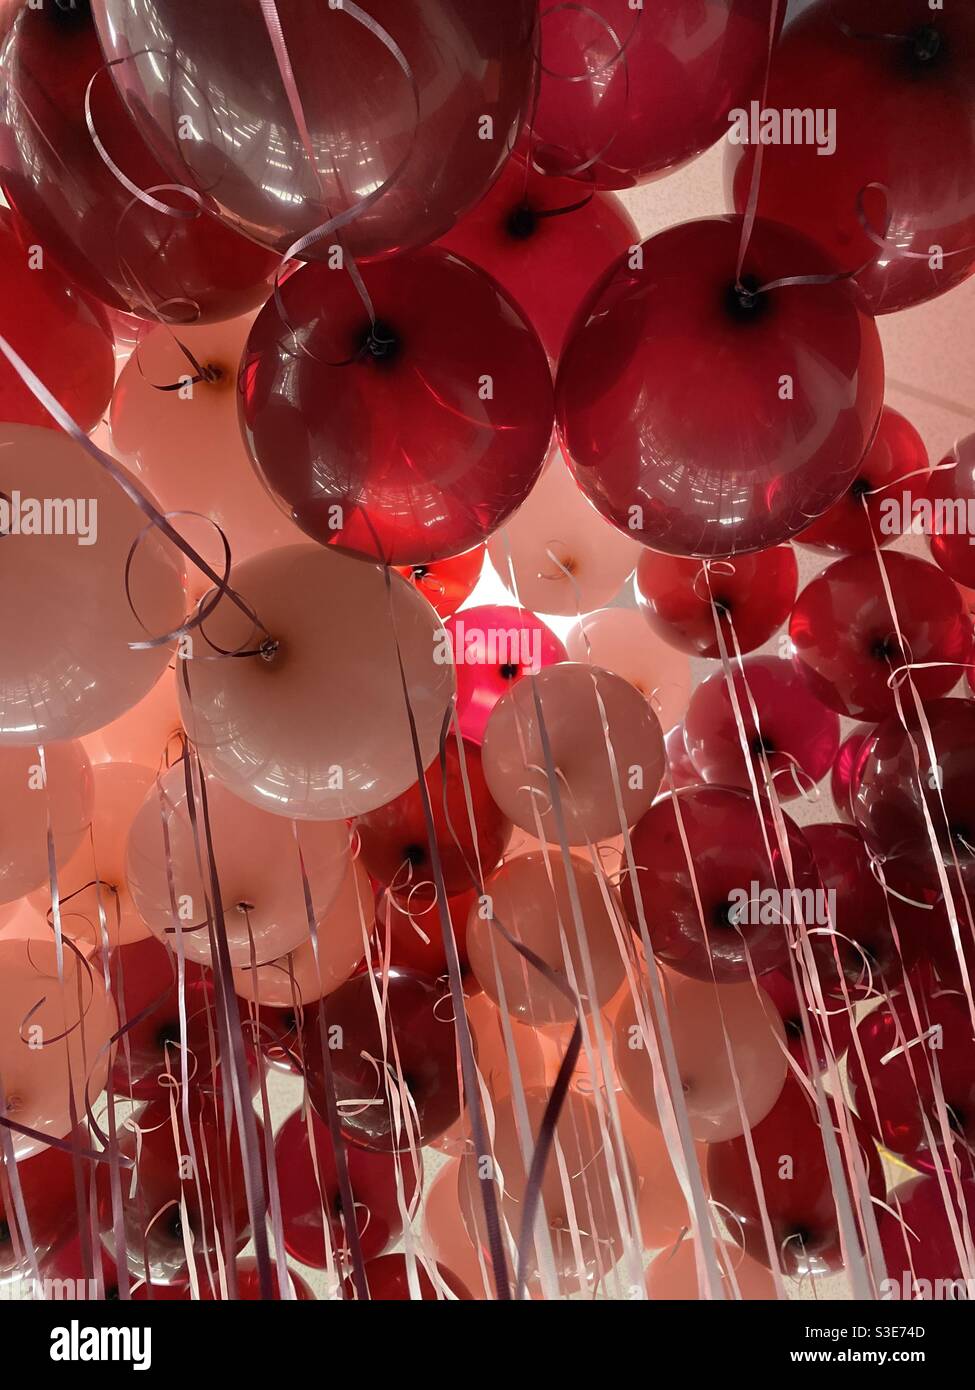 100 palloncini rosa e bordeaux Foto stock - Alamy